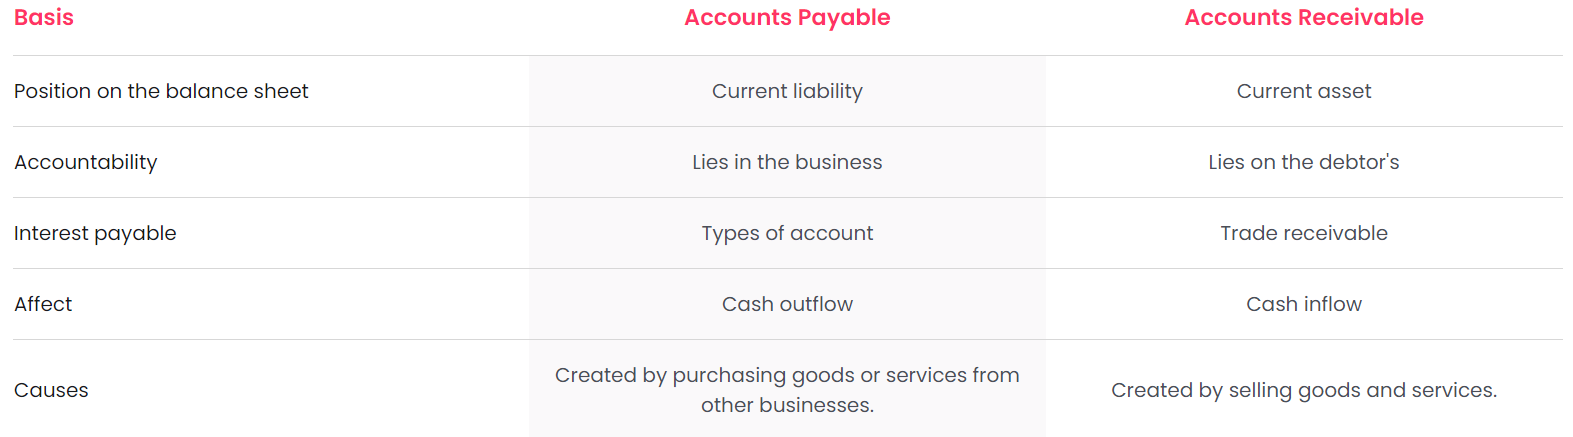 Accounts receivable vs accounts payable